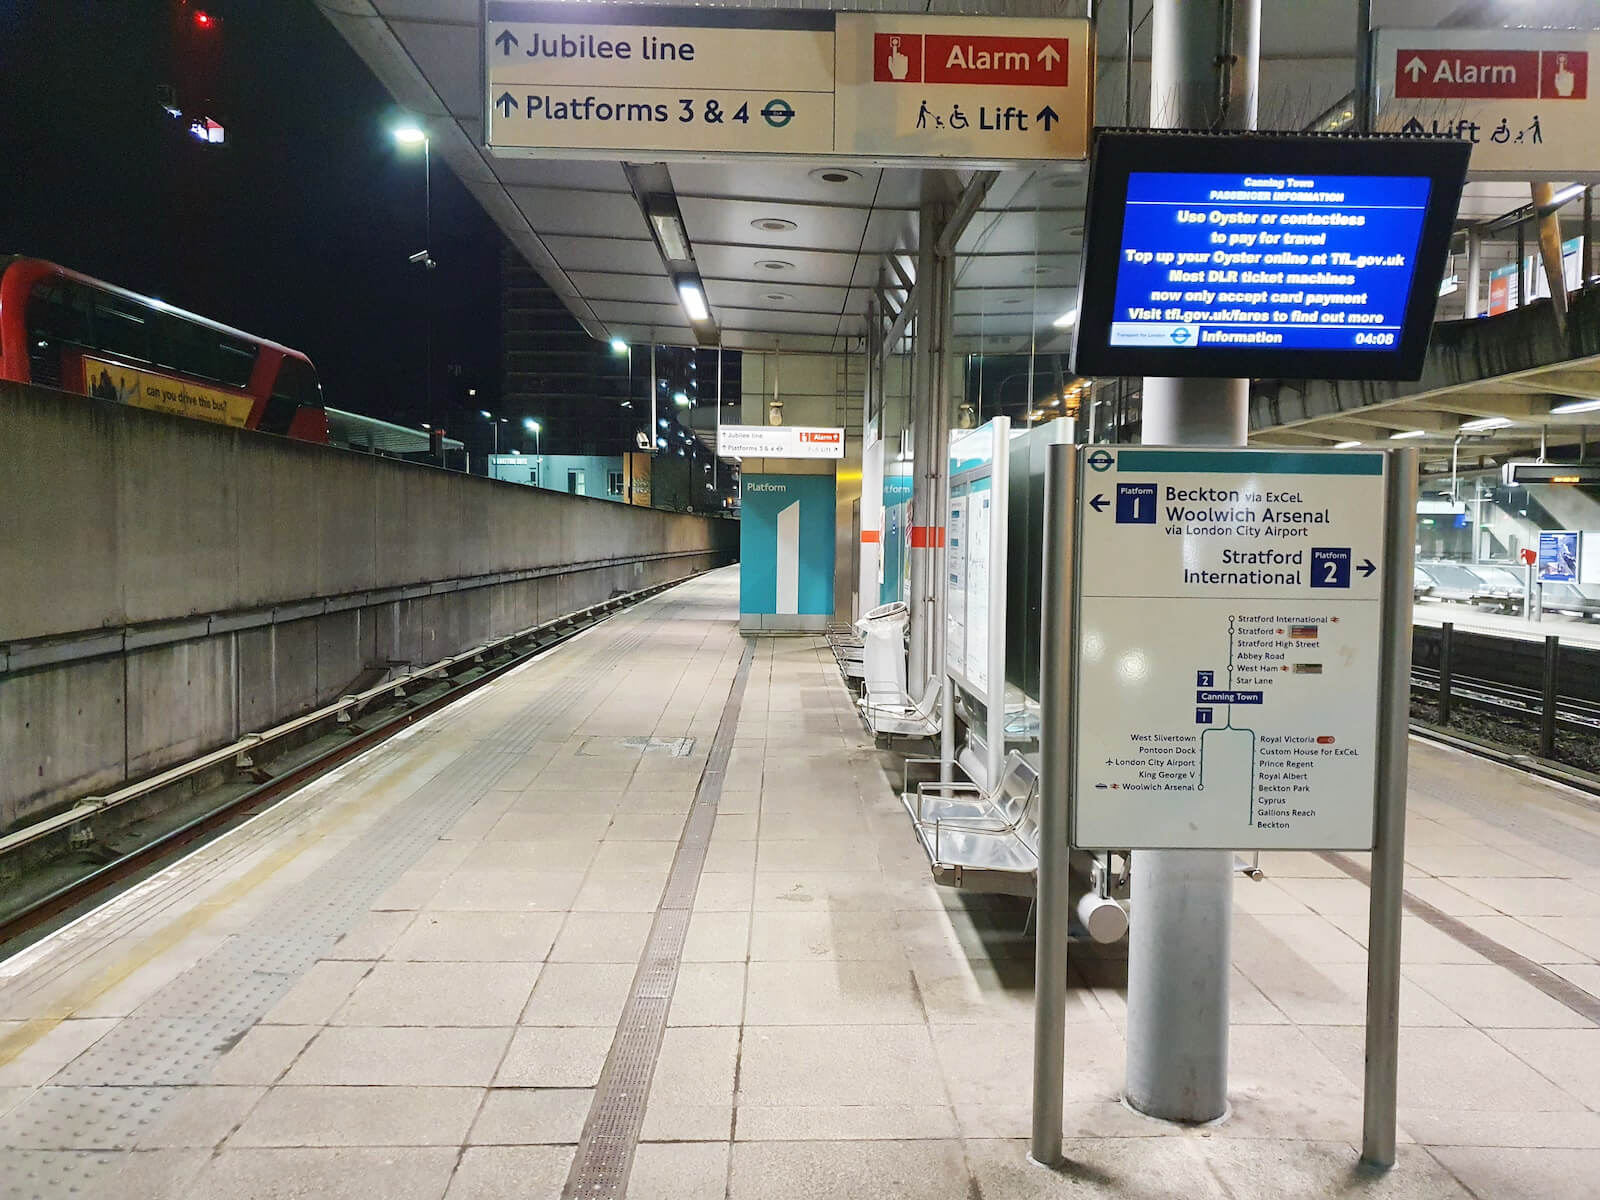 Signage on a TFL train station platform